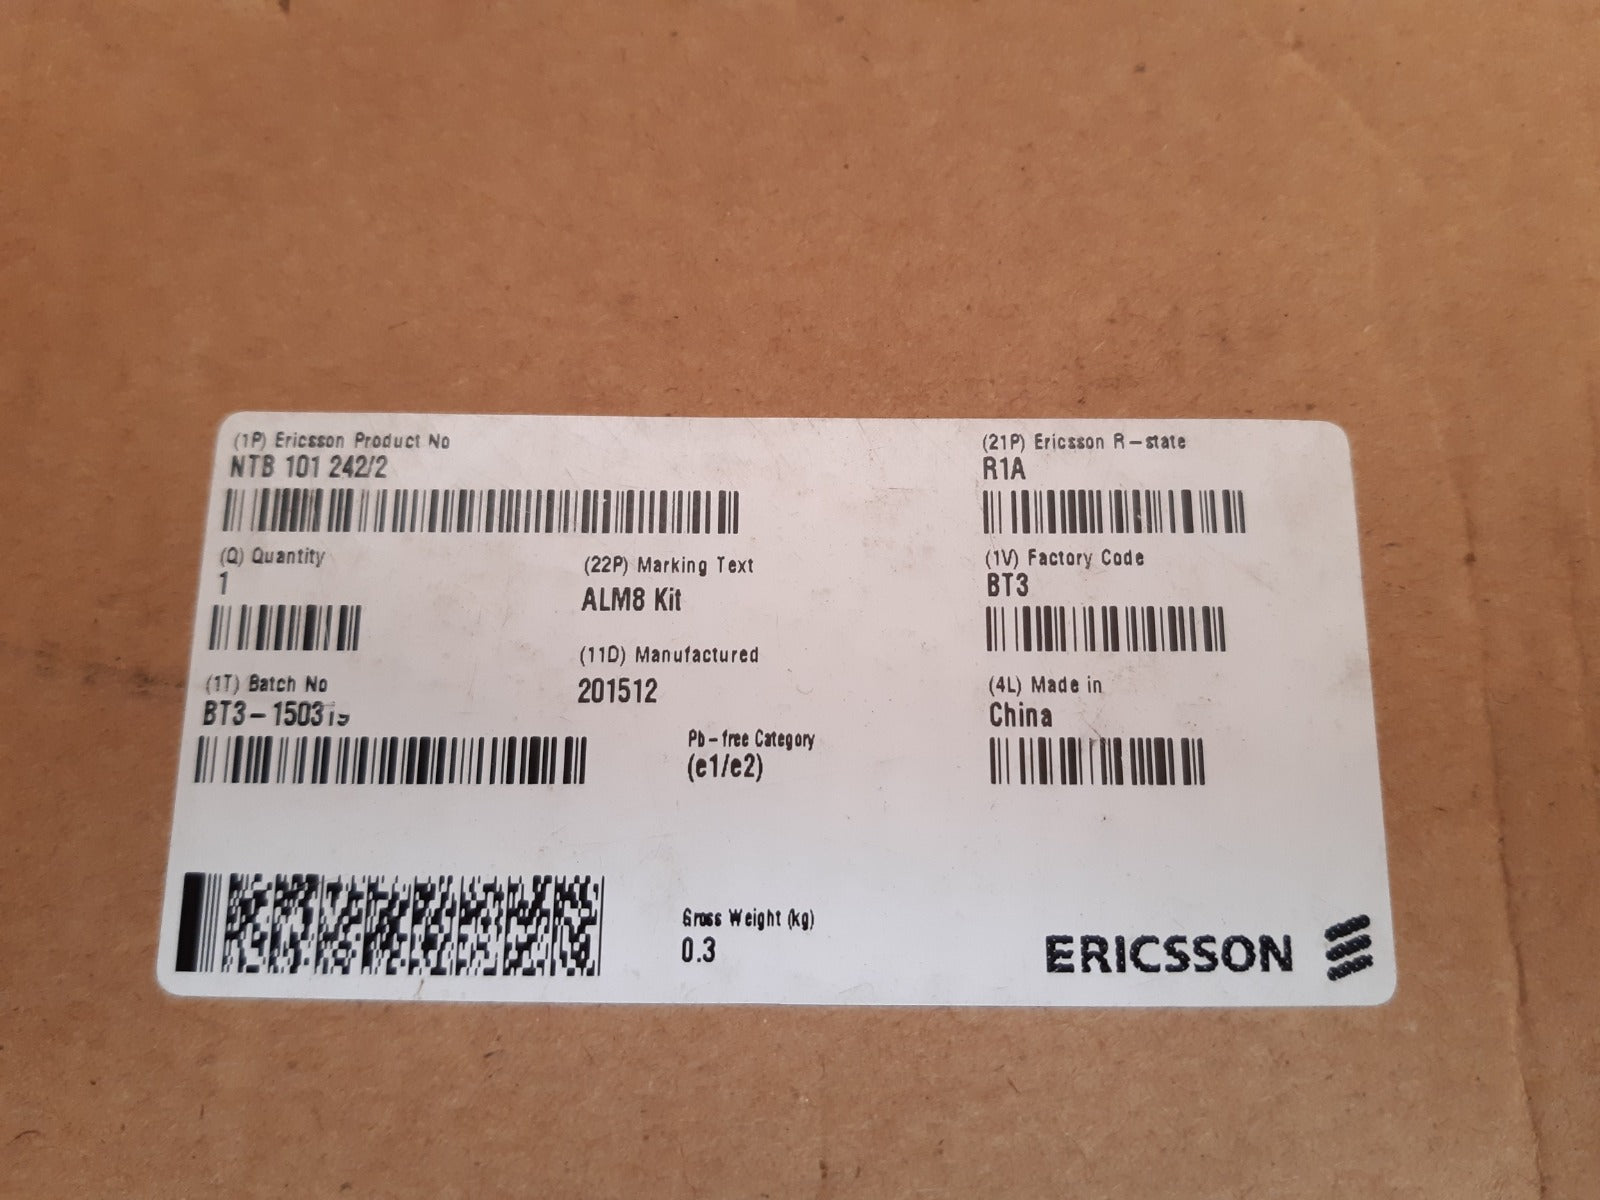 Ericsson ovp-alm8 external alarms module nfd30234/08 